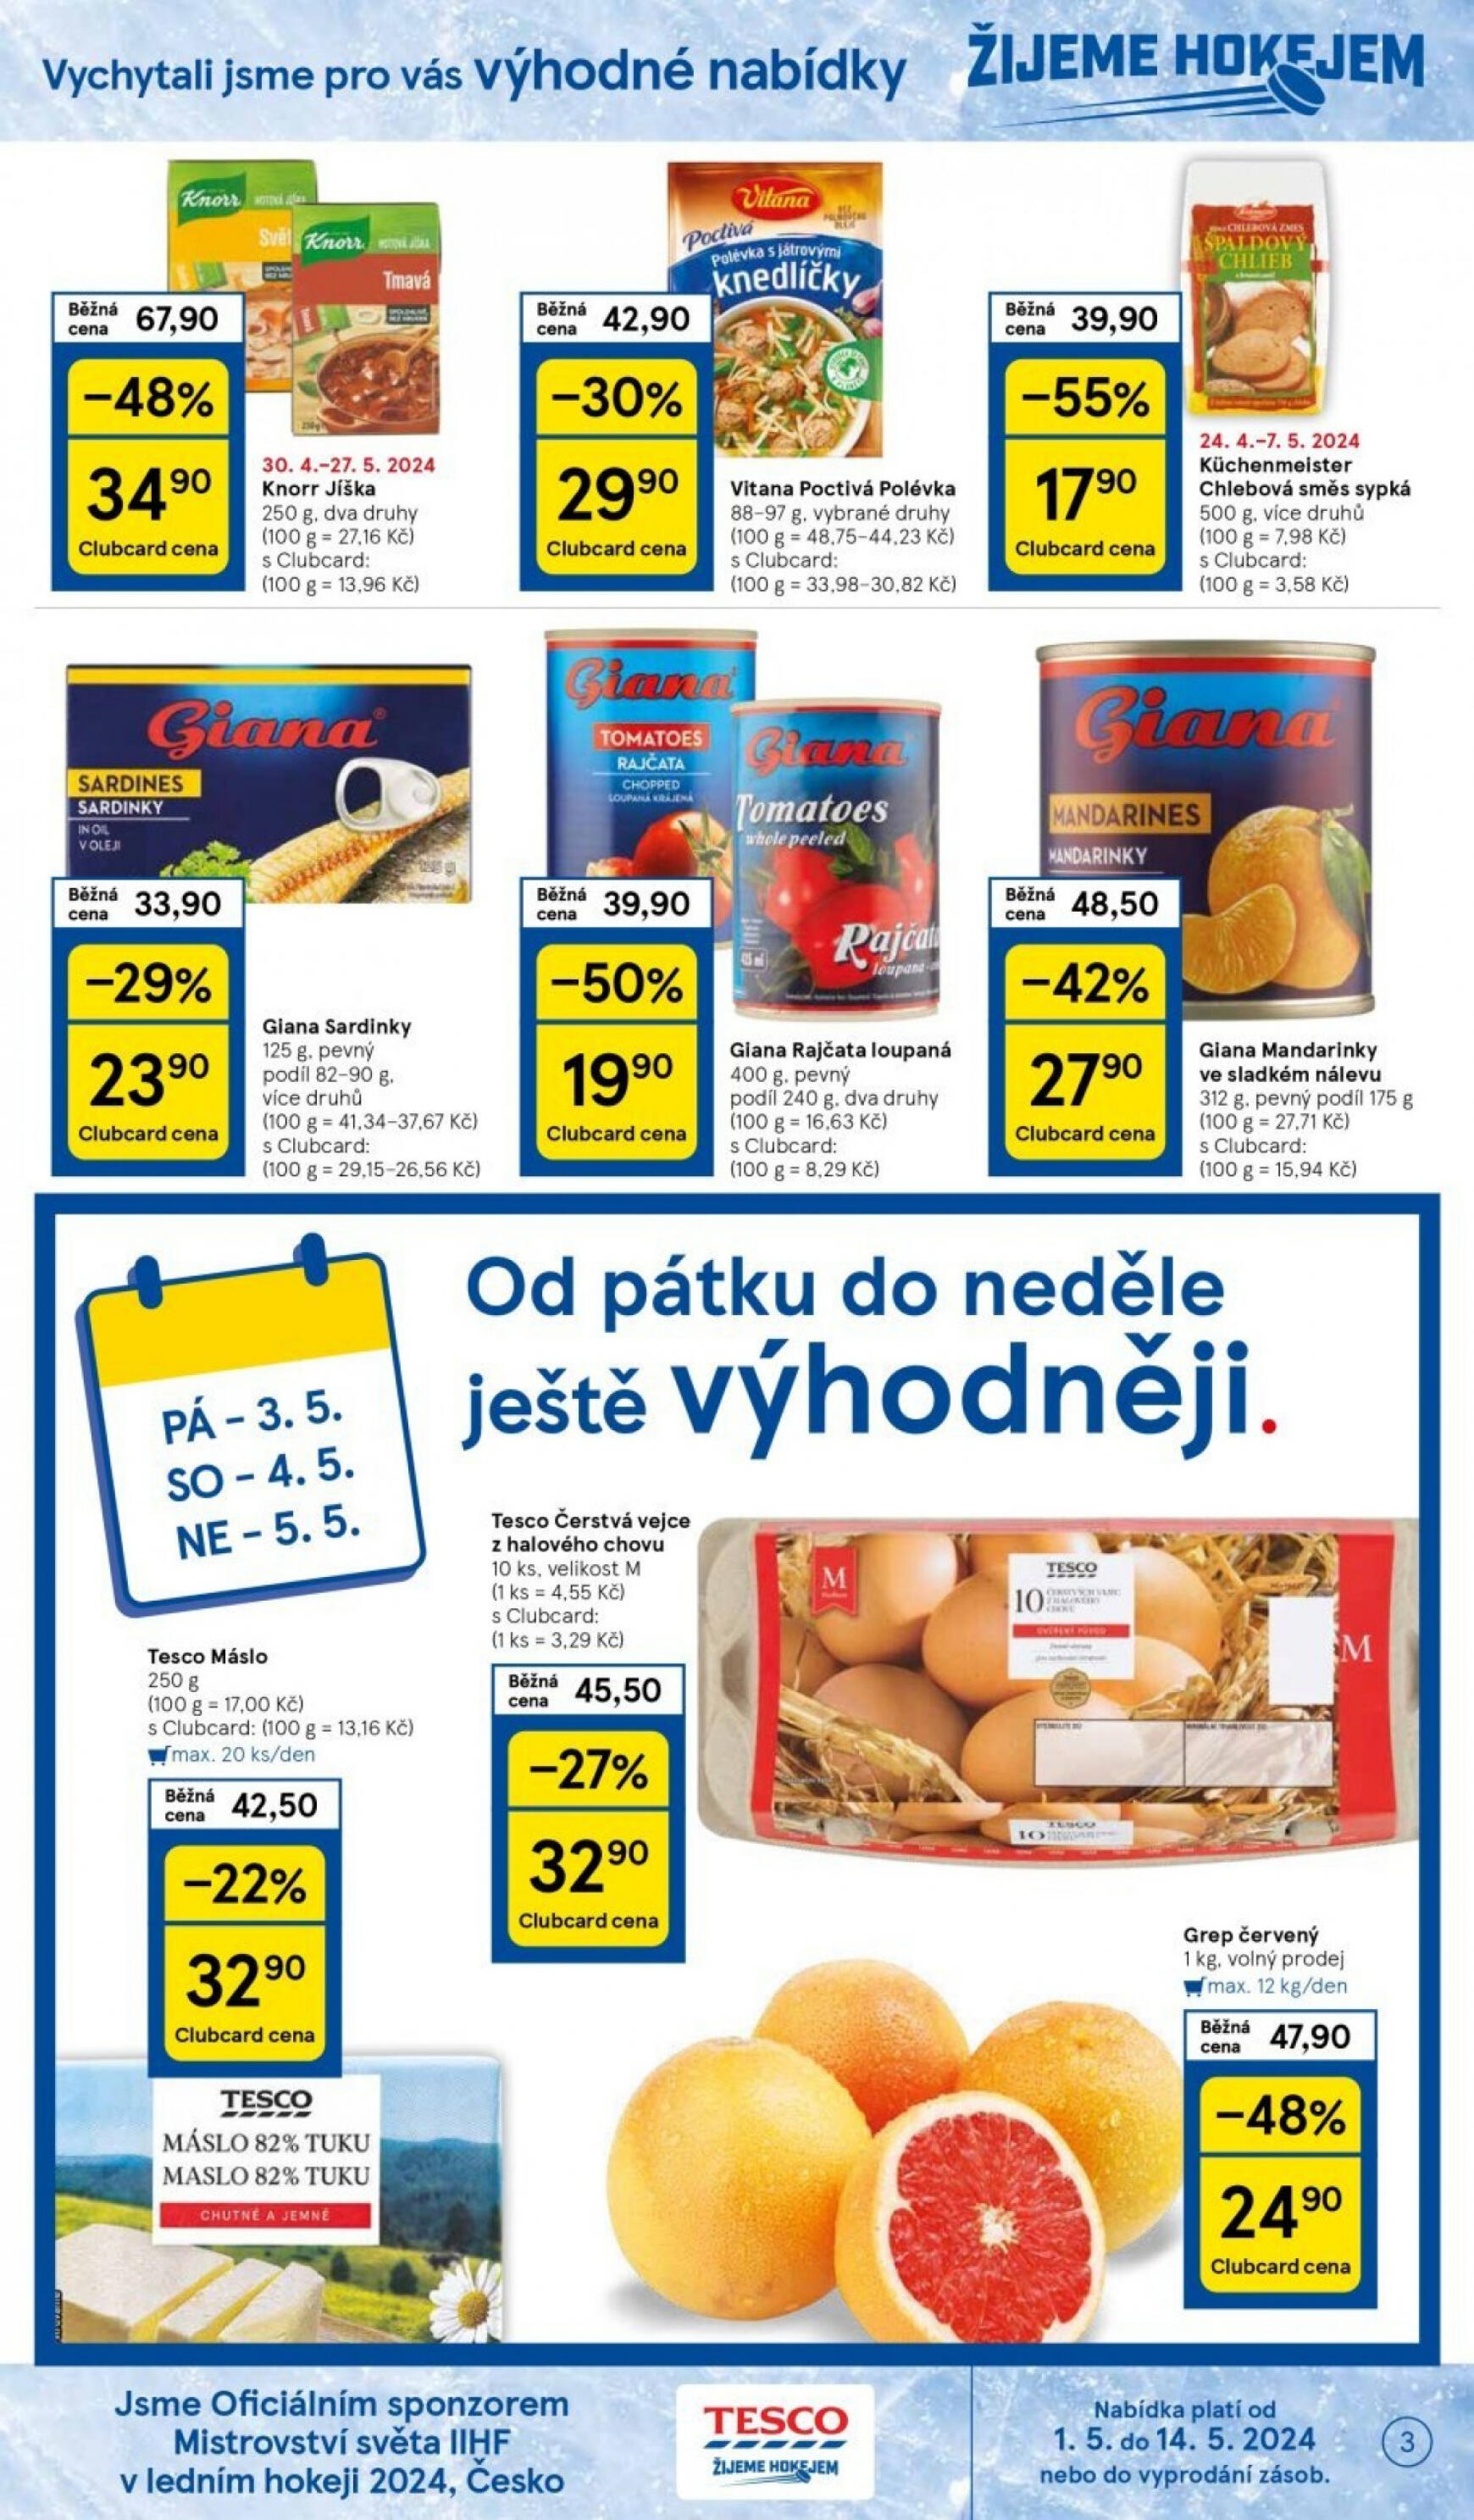 tesco - Leták Tesco supermarket aktuální 01.05. - 07.05. - page: 3